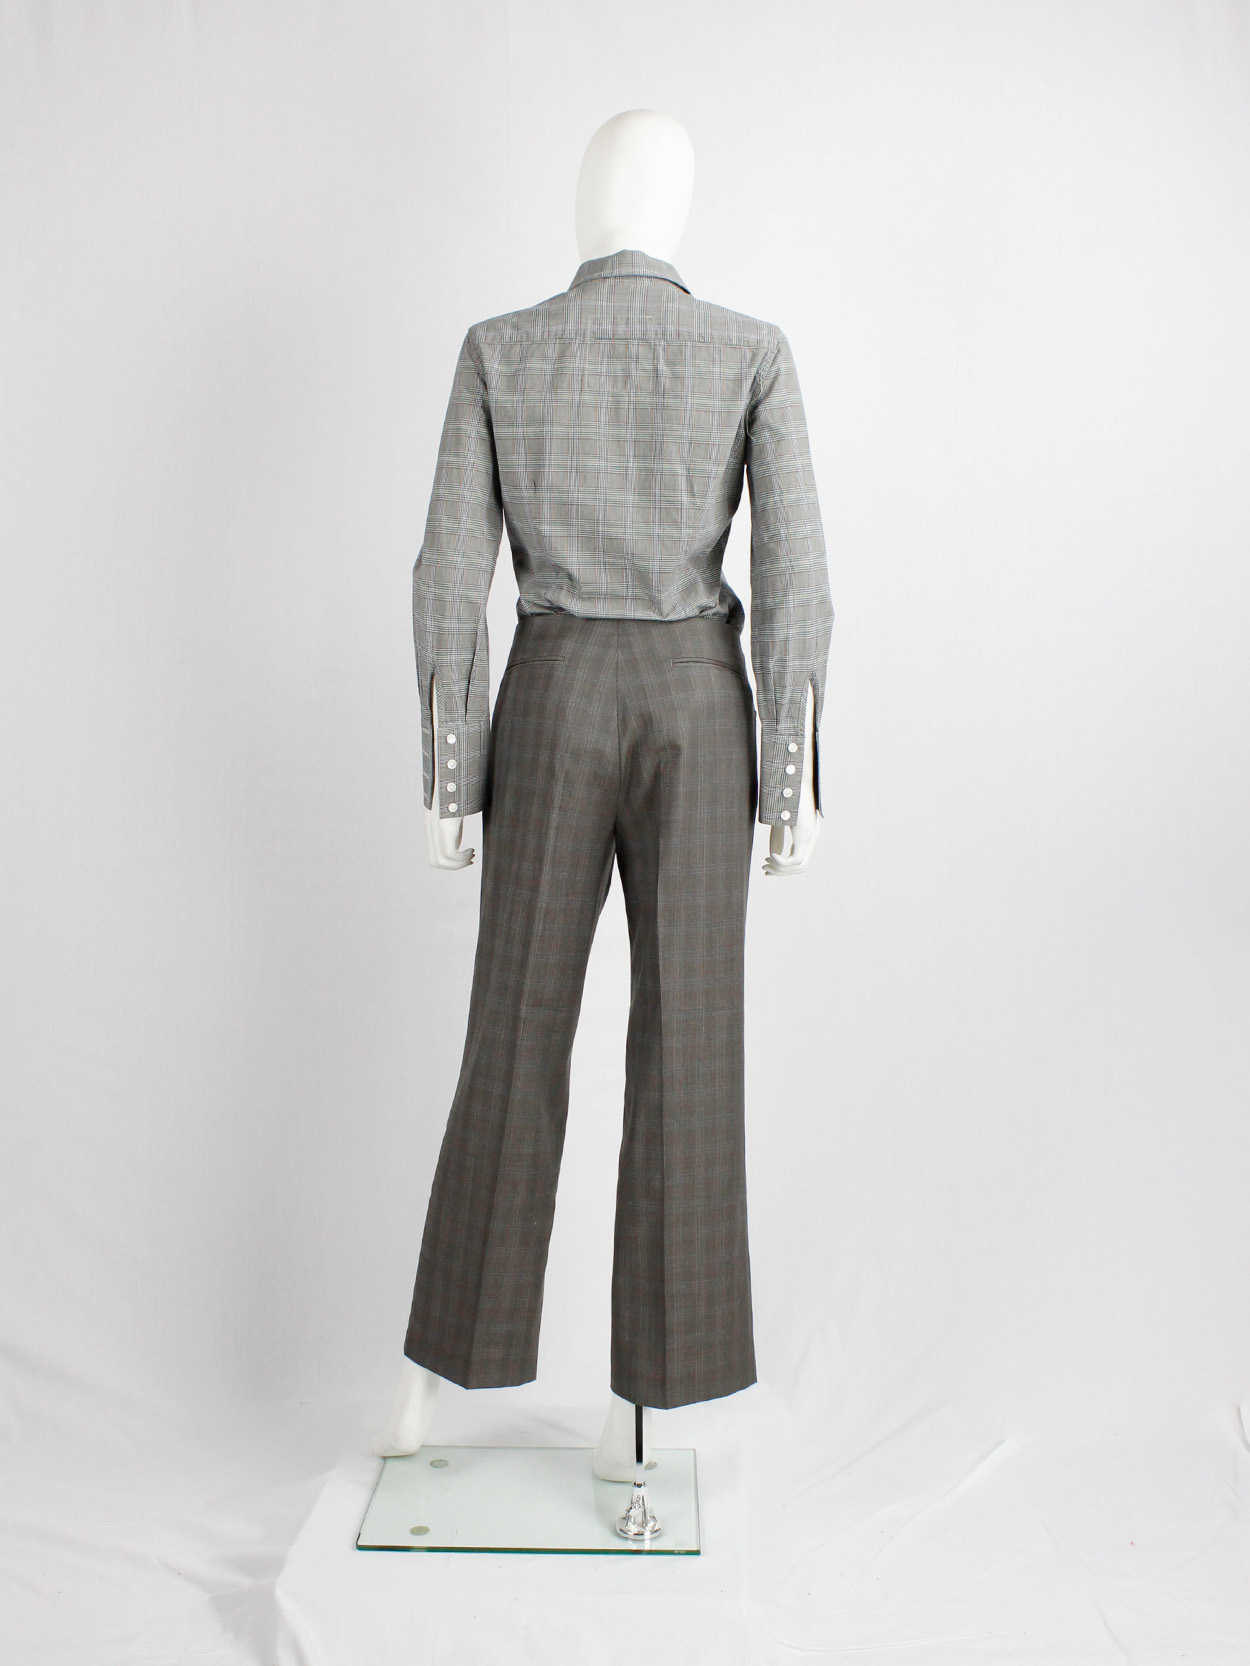 Maison Martin Margiela brown tartan trousers with side belt detail fall 2004 (13)